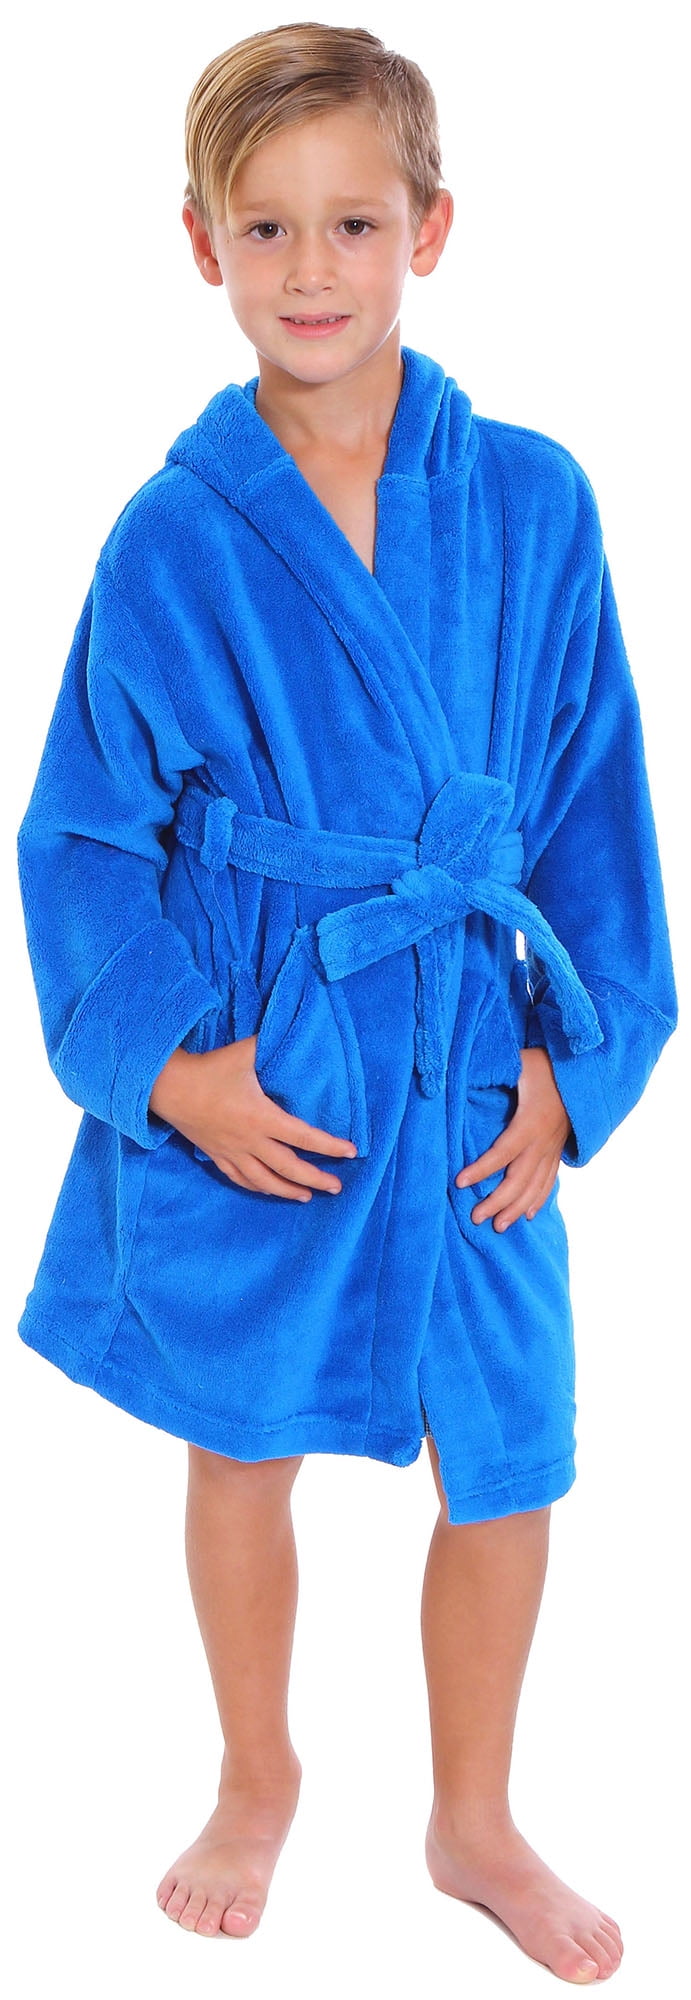 Simplicity Big Boys' Microfiber Hooded Robe Terry Bathrobe, Royal Blue ...